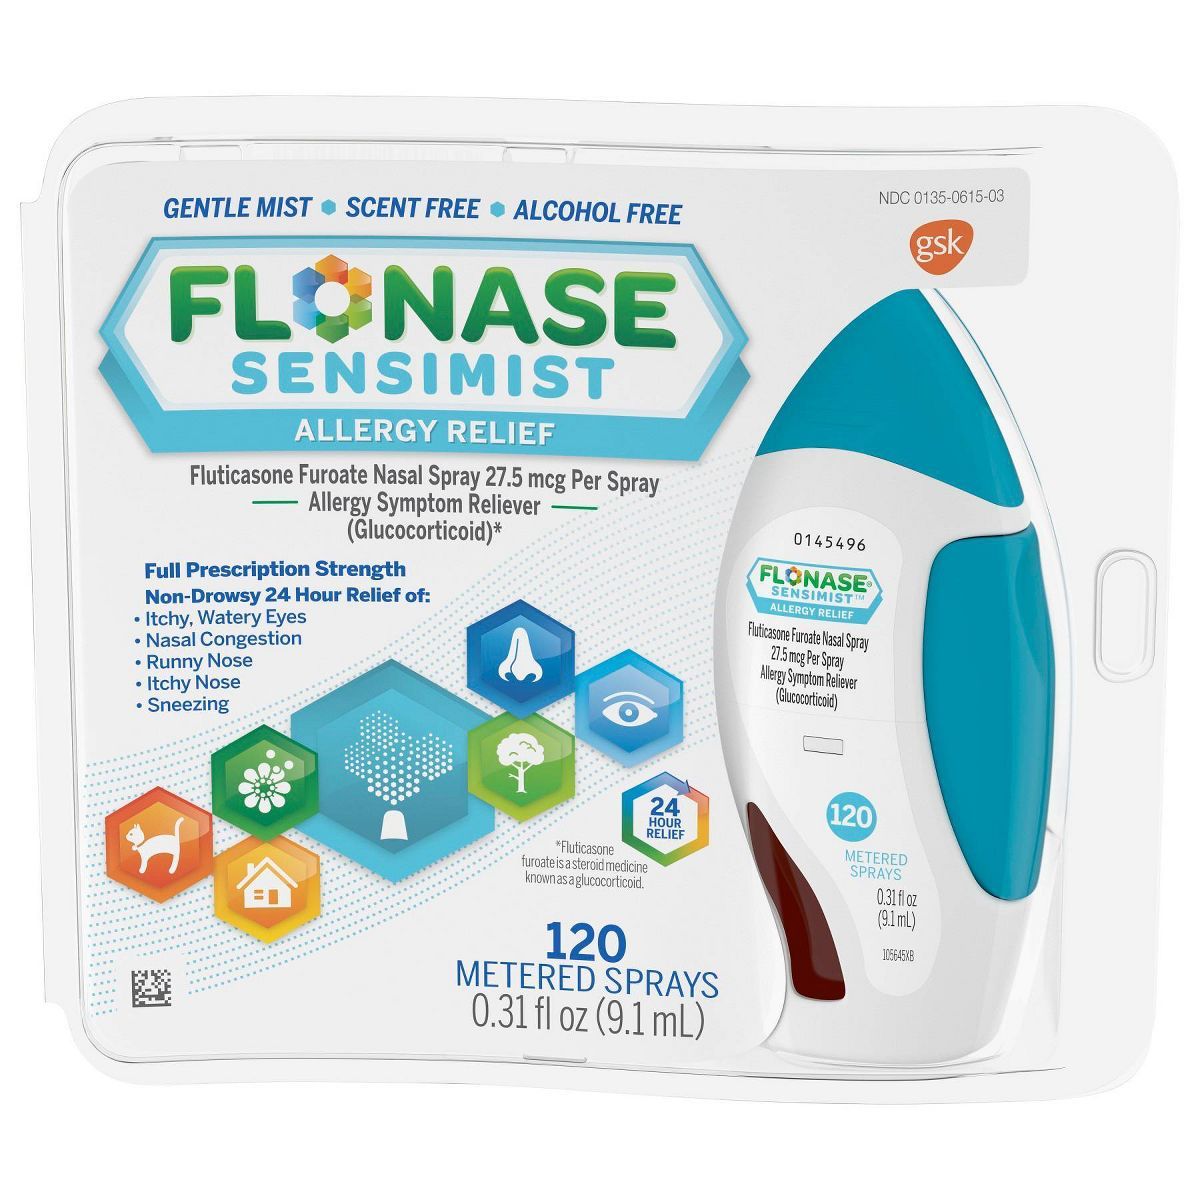 Flonase Sensimist Allergy Relief Nasal Spray - Fluticasone Furoate | Target